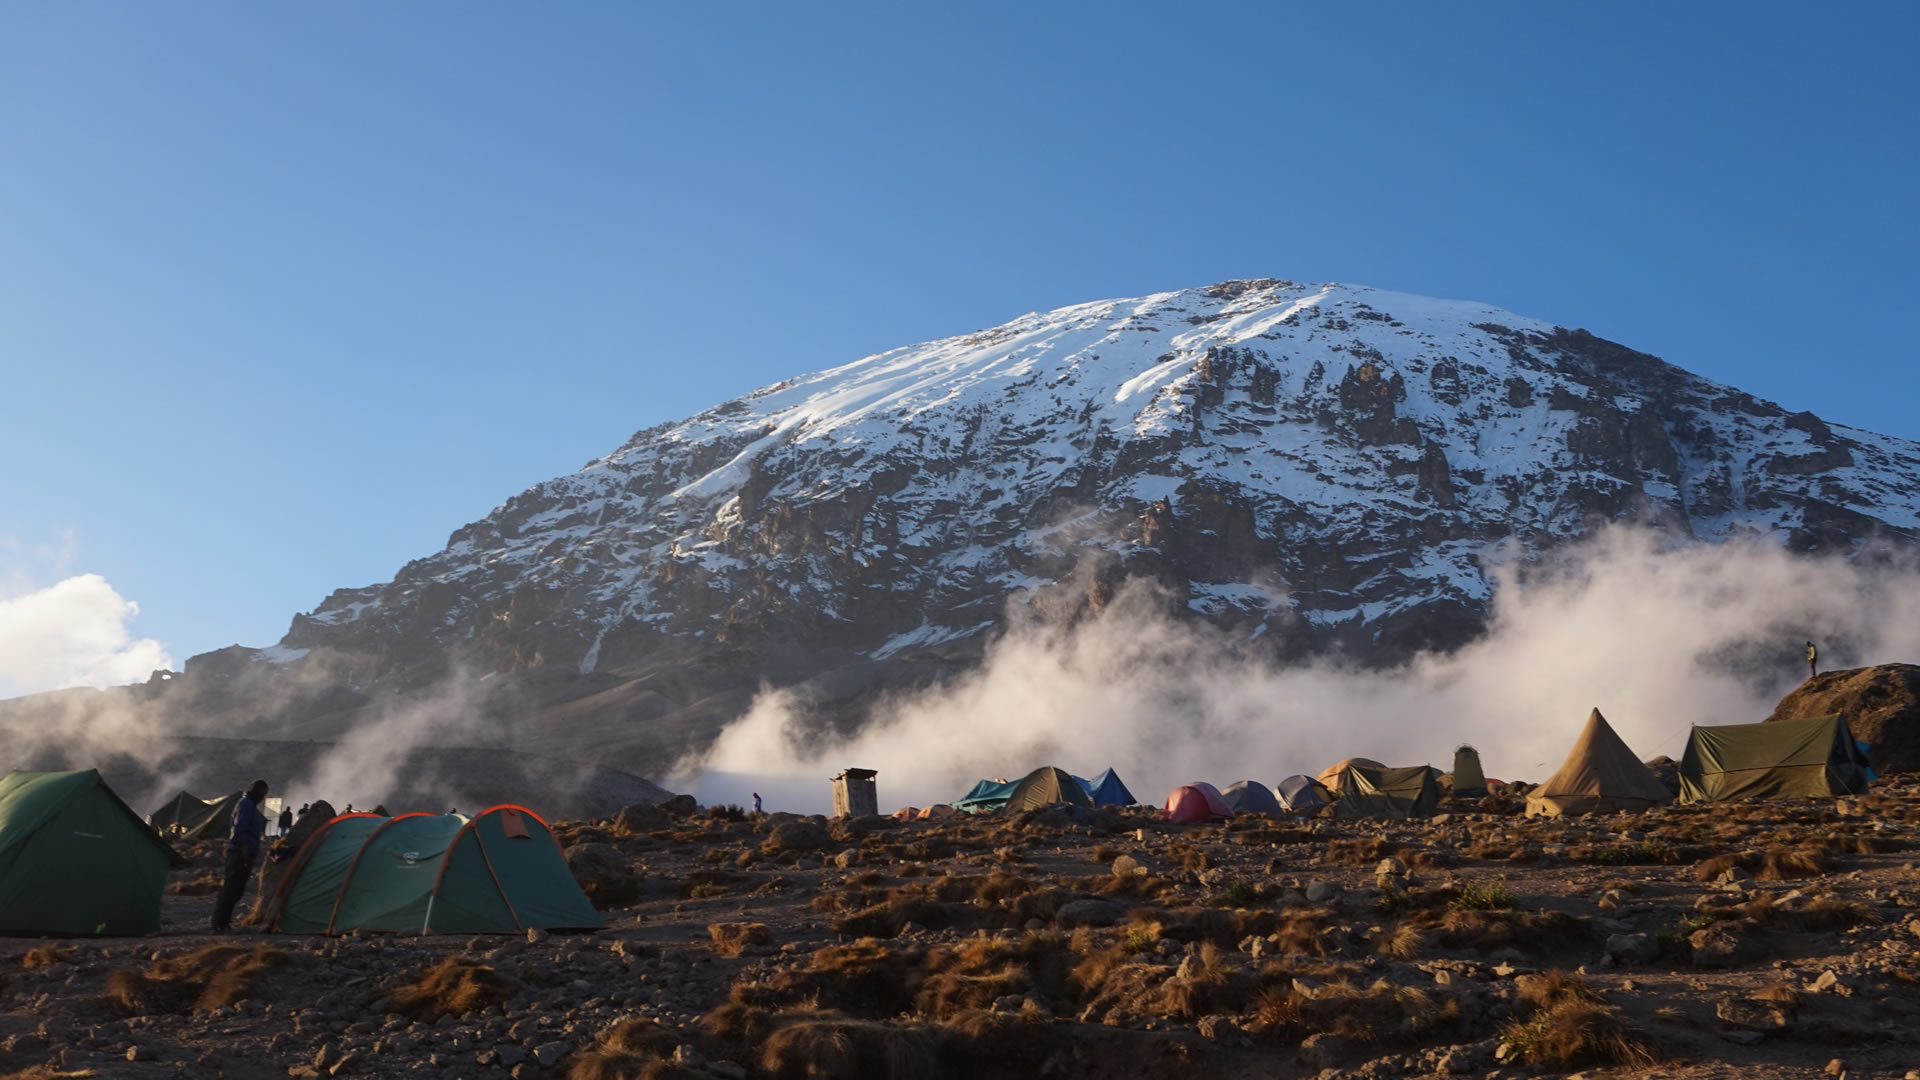 7 Days Mount Kilimanjaro Climbing - Shira Route